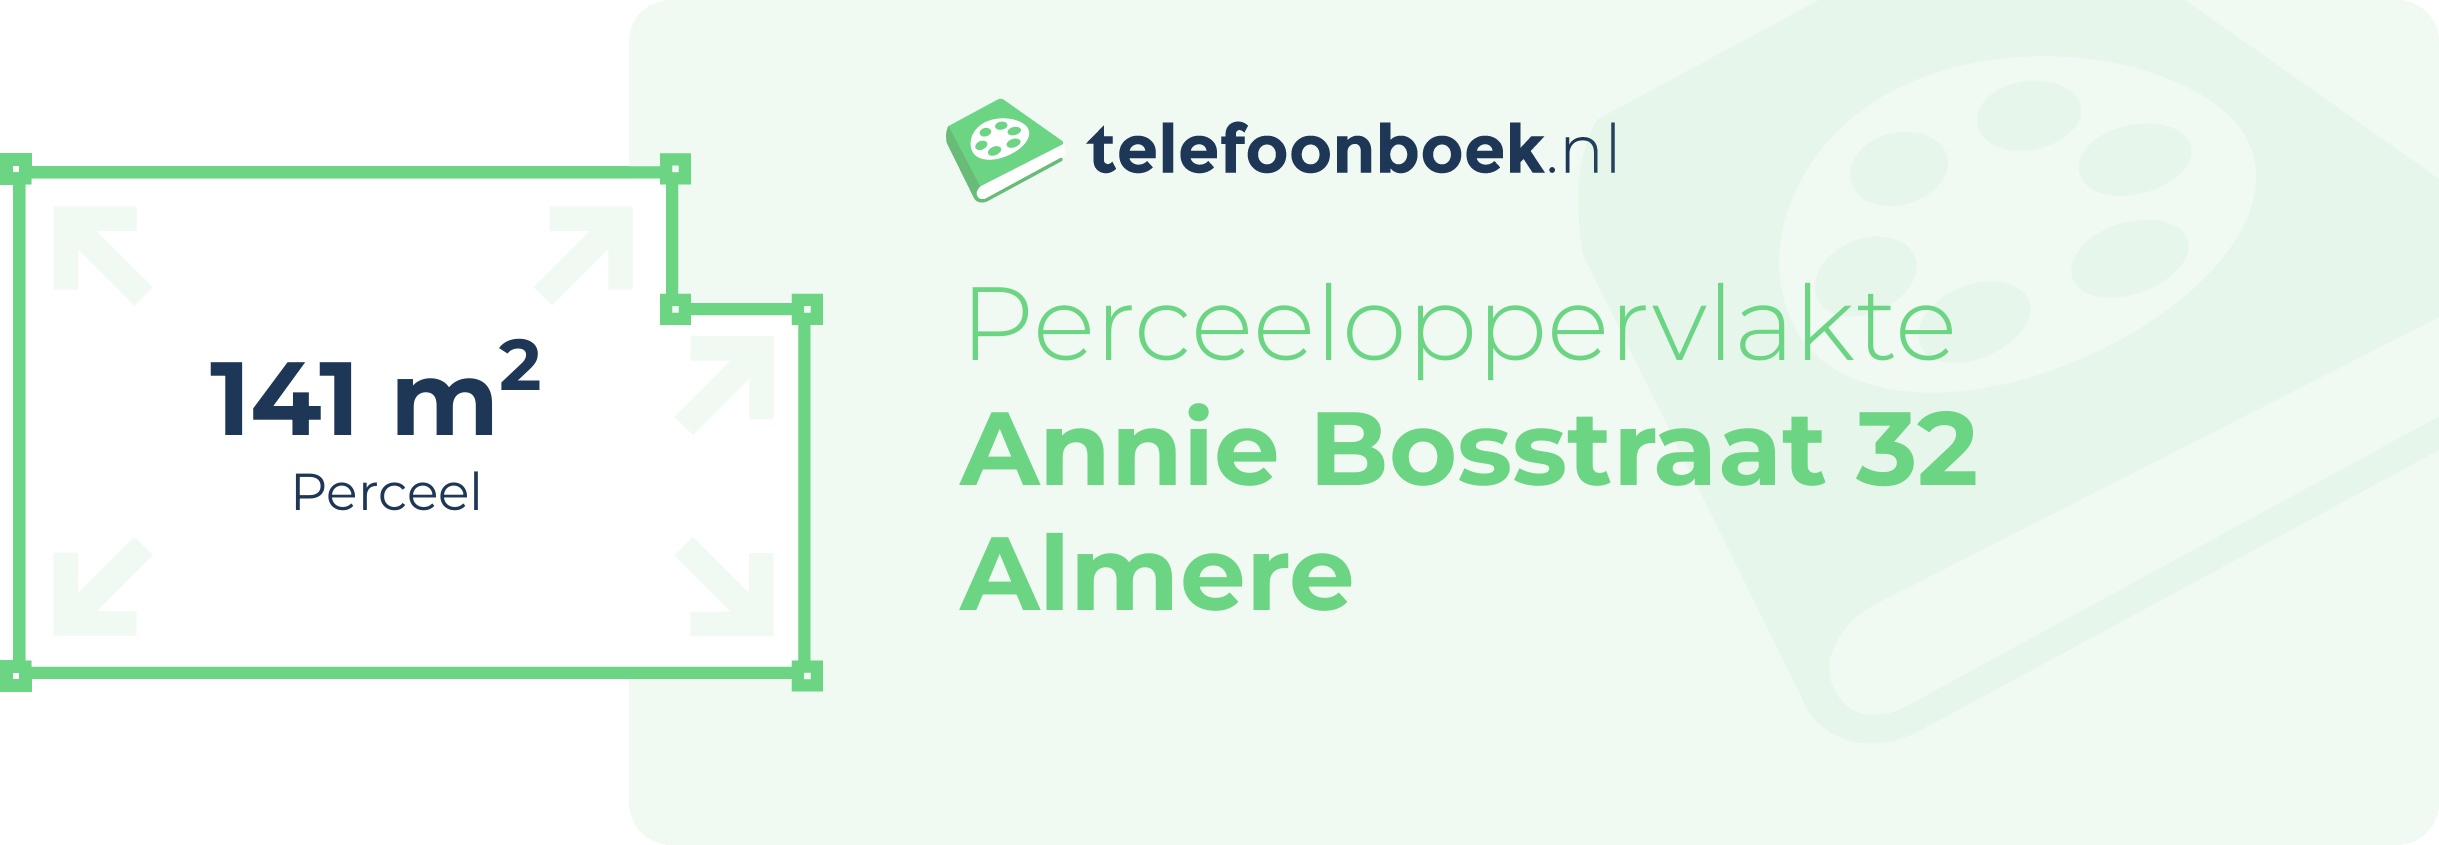 Perceeloppervlakte Annie Bosstraat 32 Almere